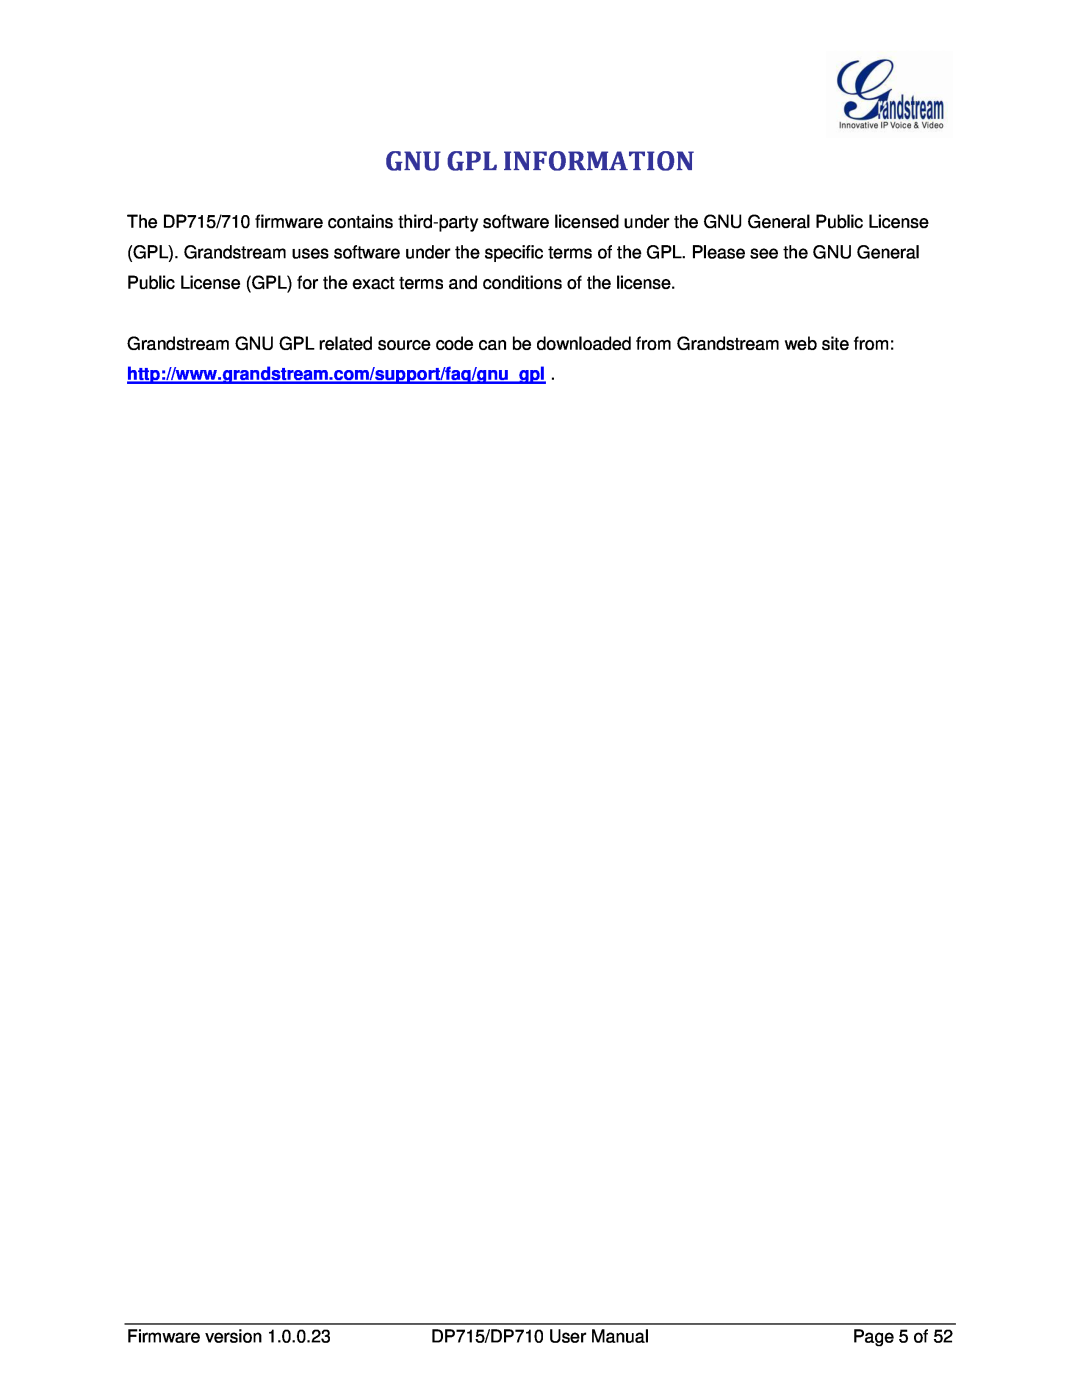 Grandstream Networks manual Gnu Gpl Information, Firmware version, DP715/DP710 User Manual, Page 5 of 